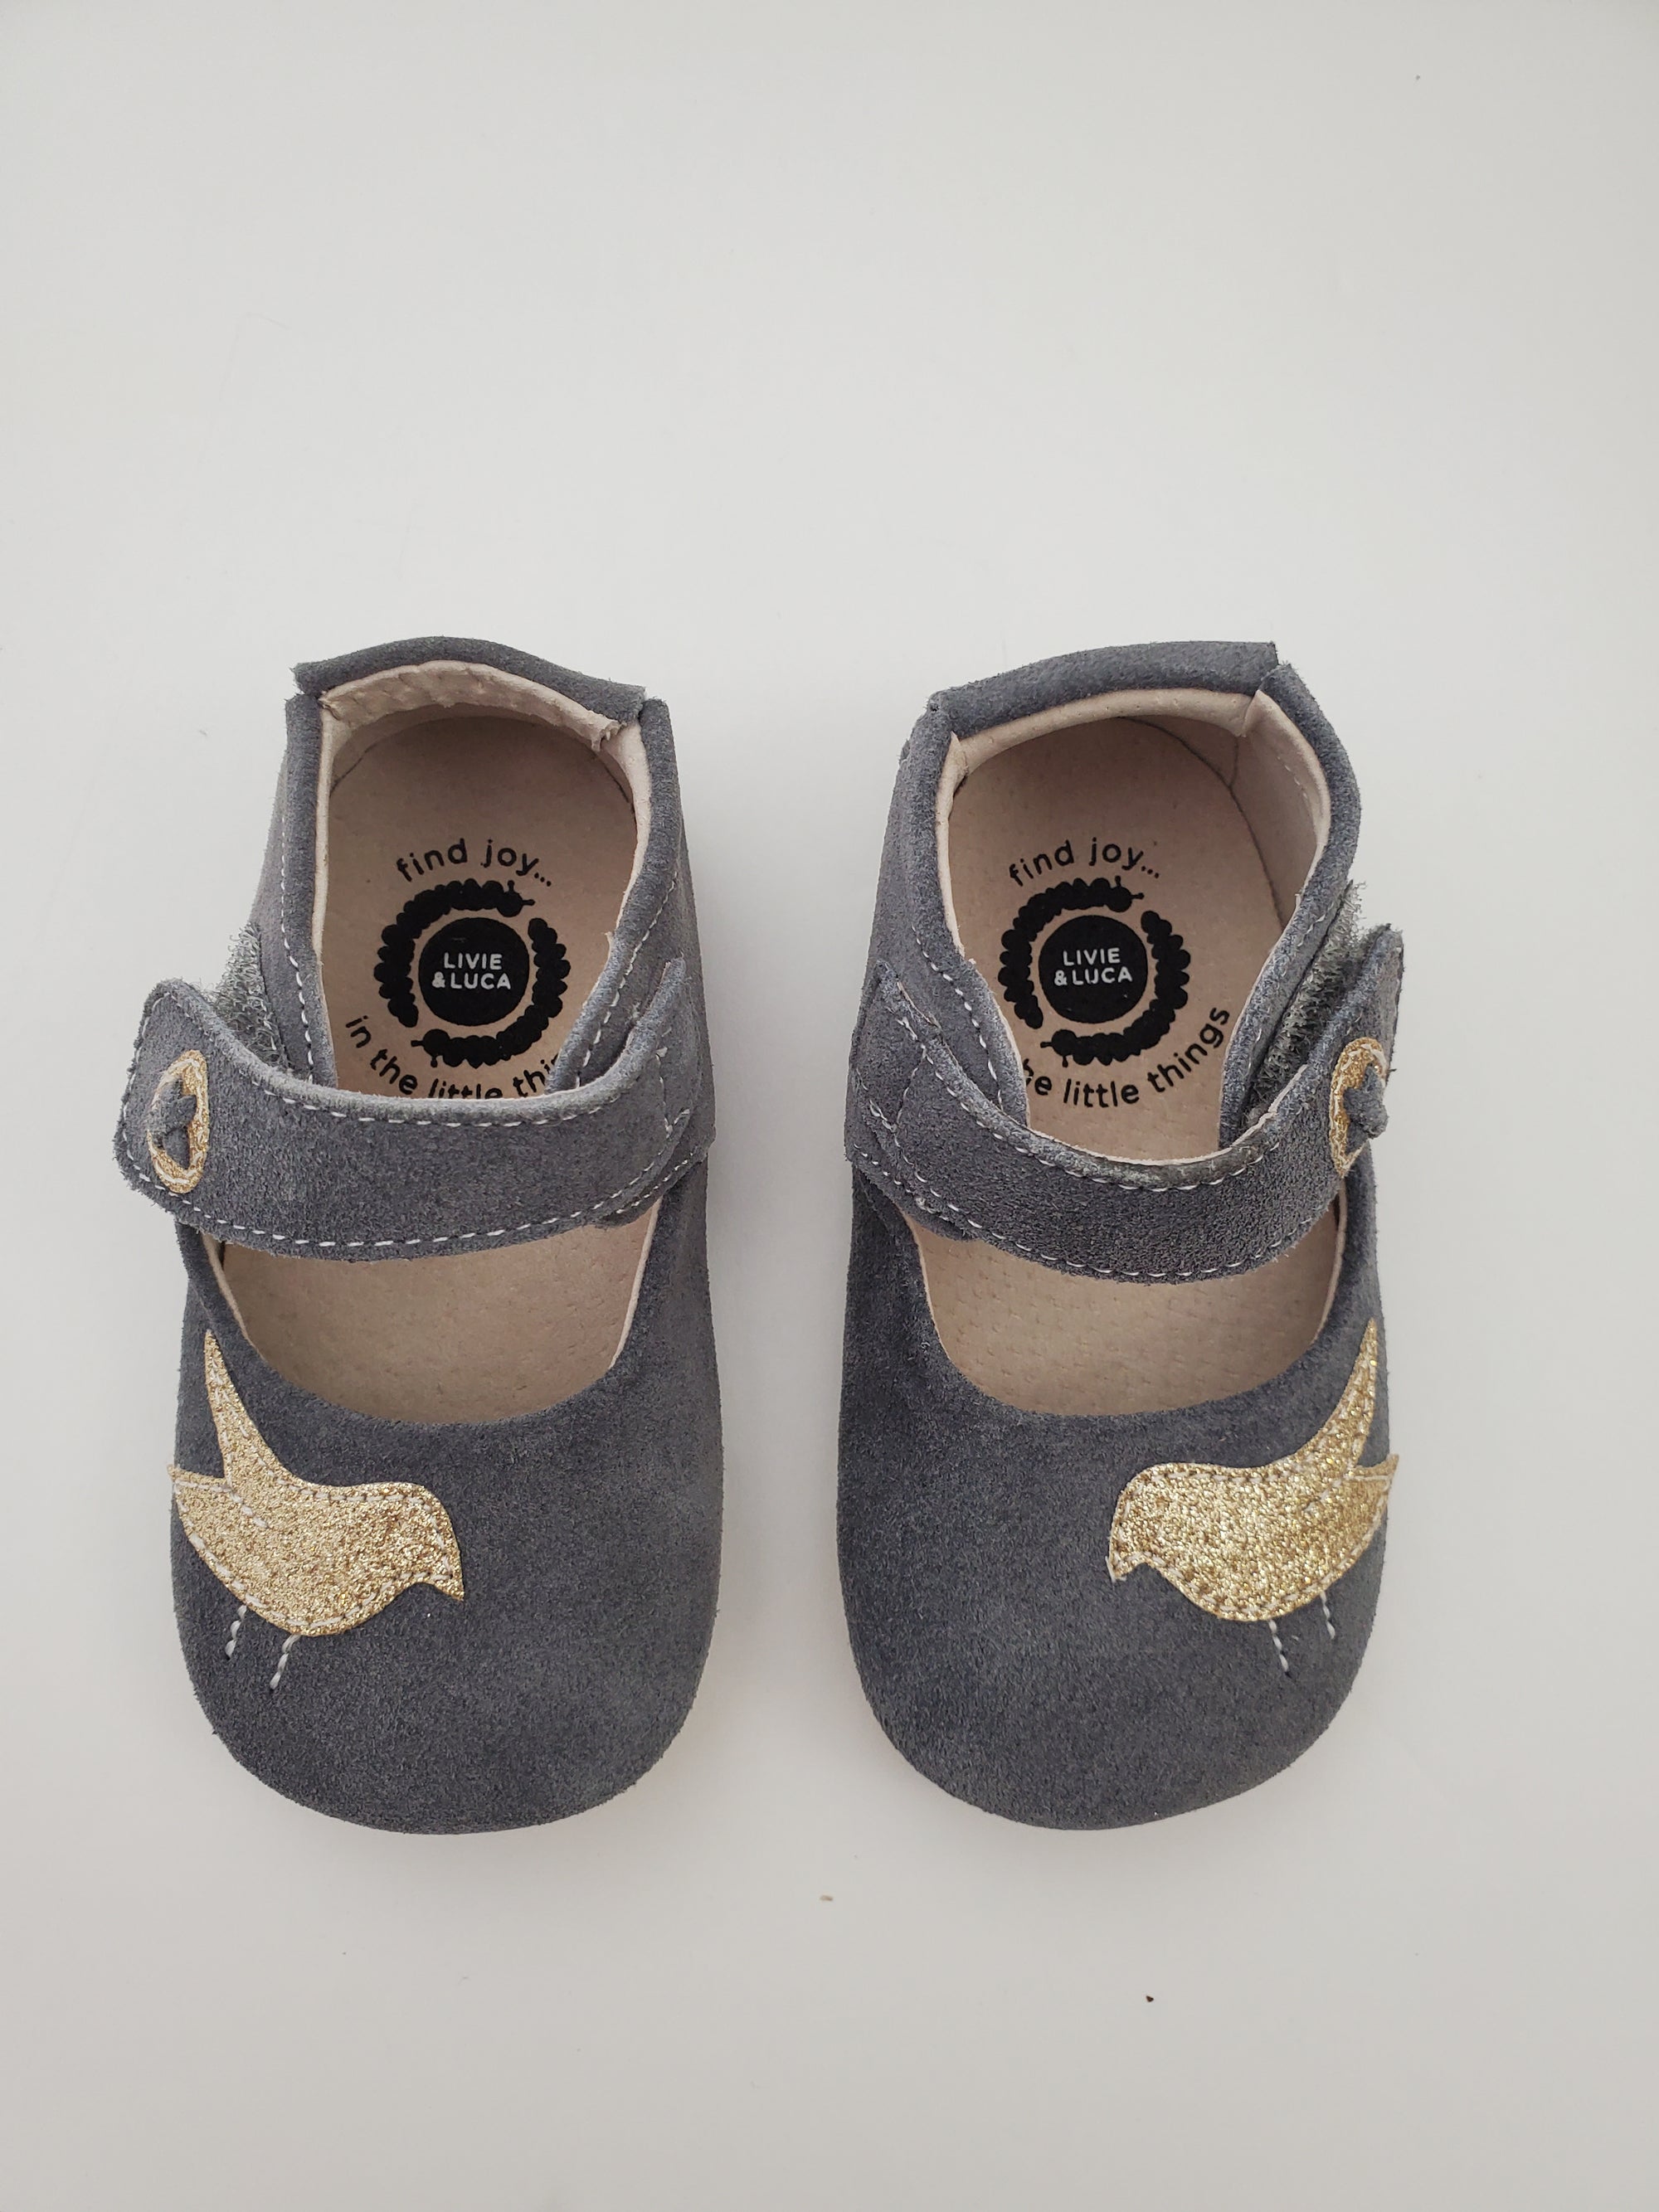 Livie & Luca Pio Pio Crib Shoe in Grey ( final sale)